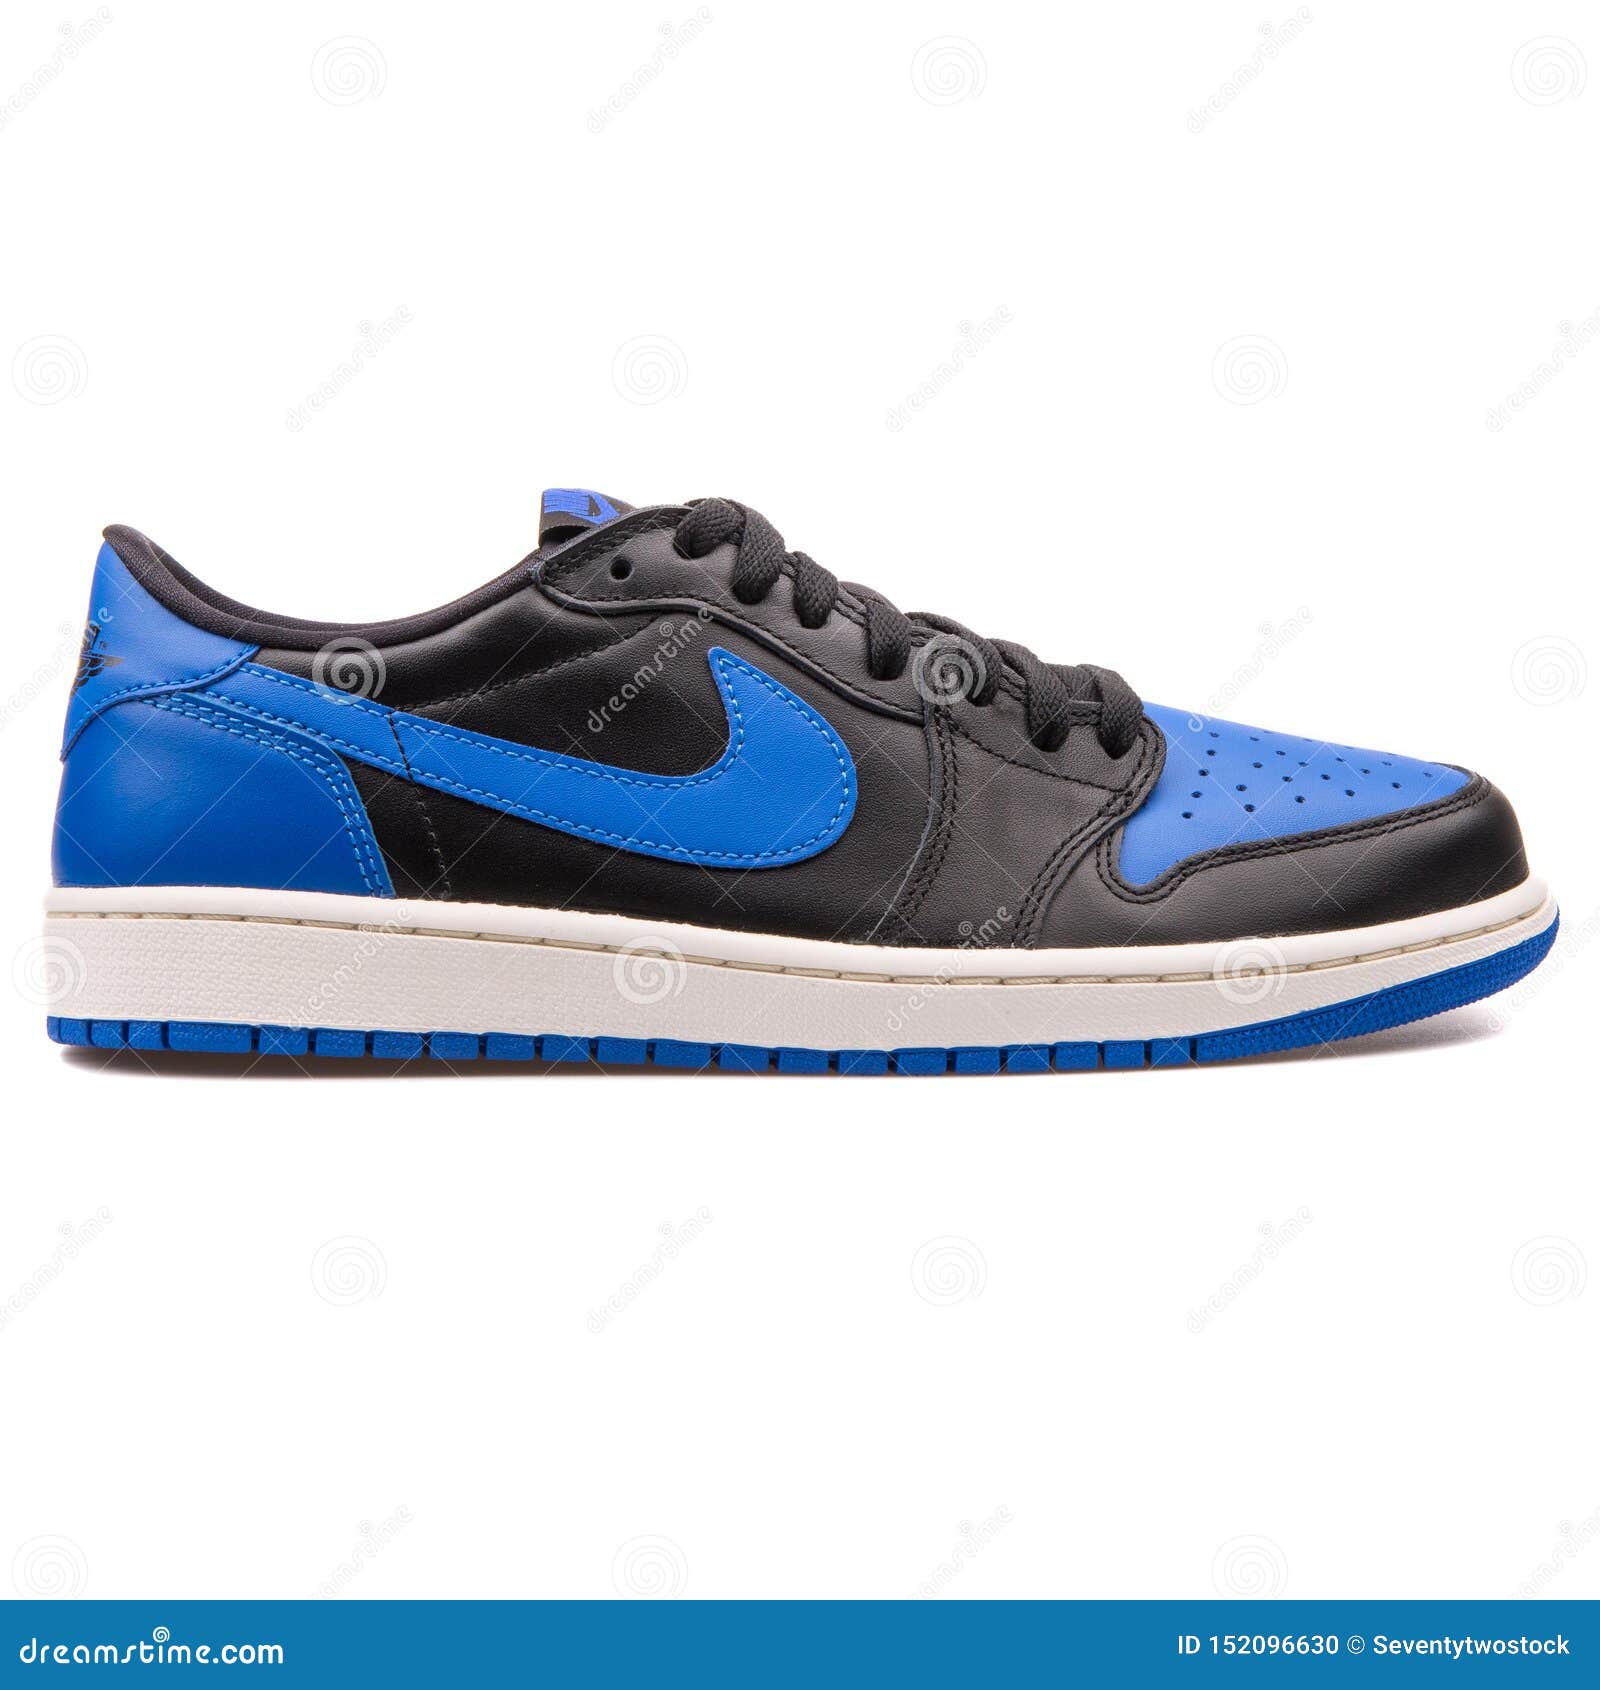 Nike Air Jordan 1 Retro Low OG Black and Blue Sneaker Editorial Image -  Image of blue, shoes: 152096630